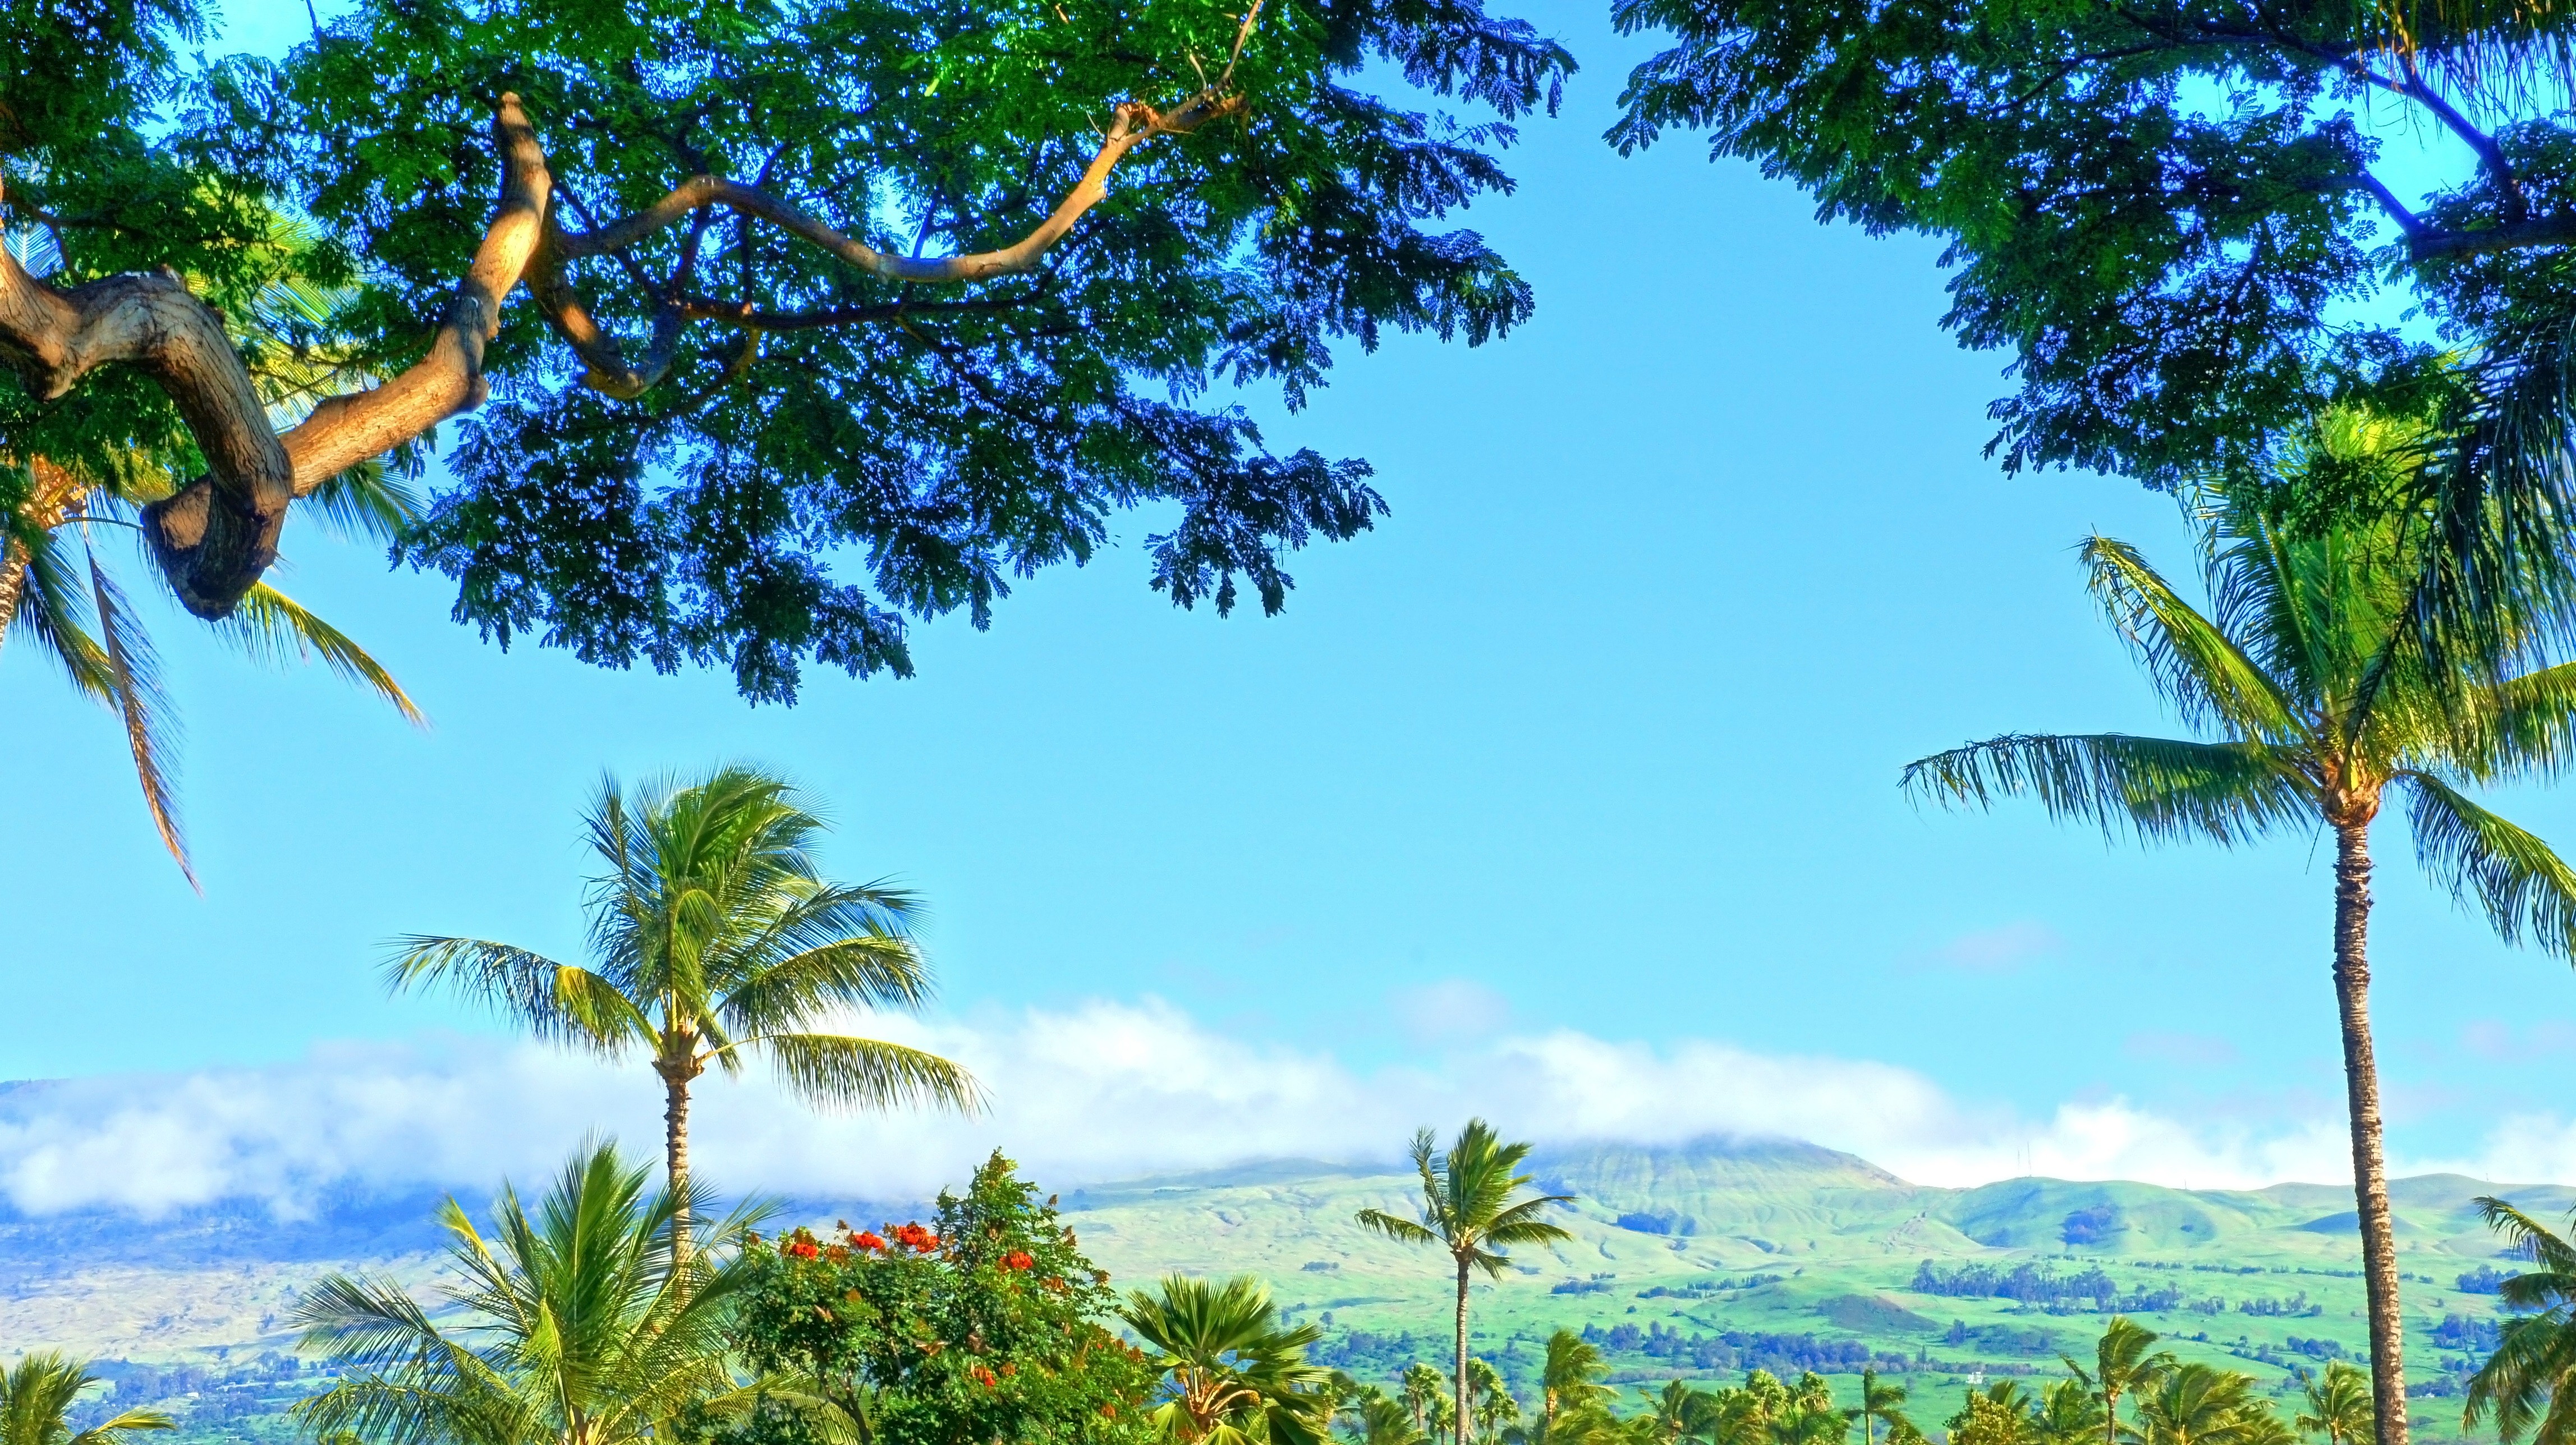 General 4591x2575 tropical water tropical forest Hawaii Maui palm trees beach waterfall